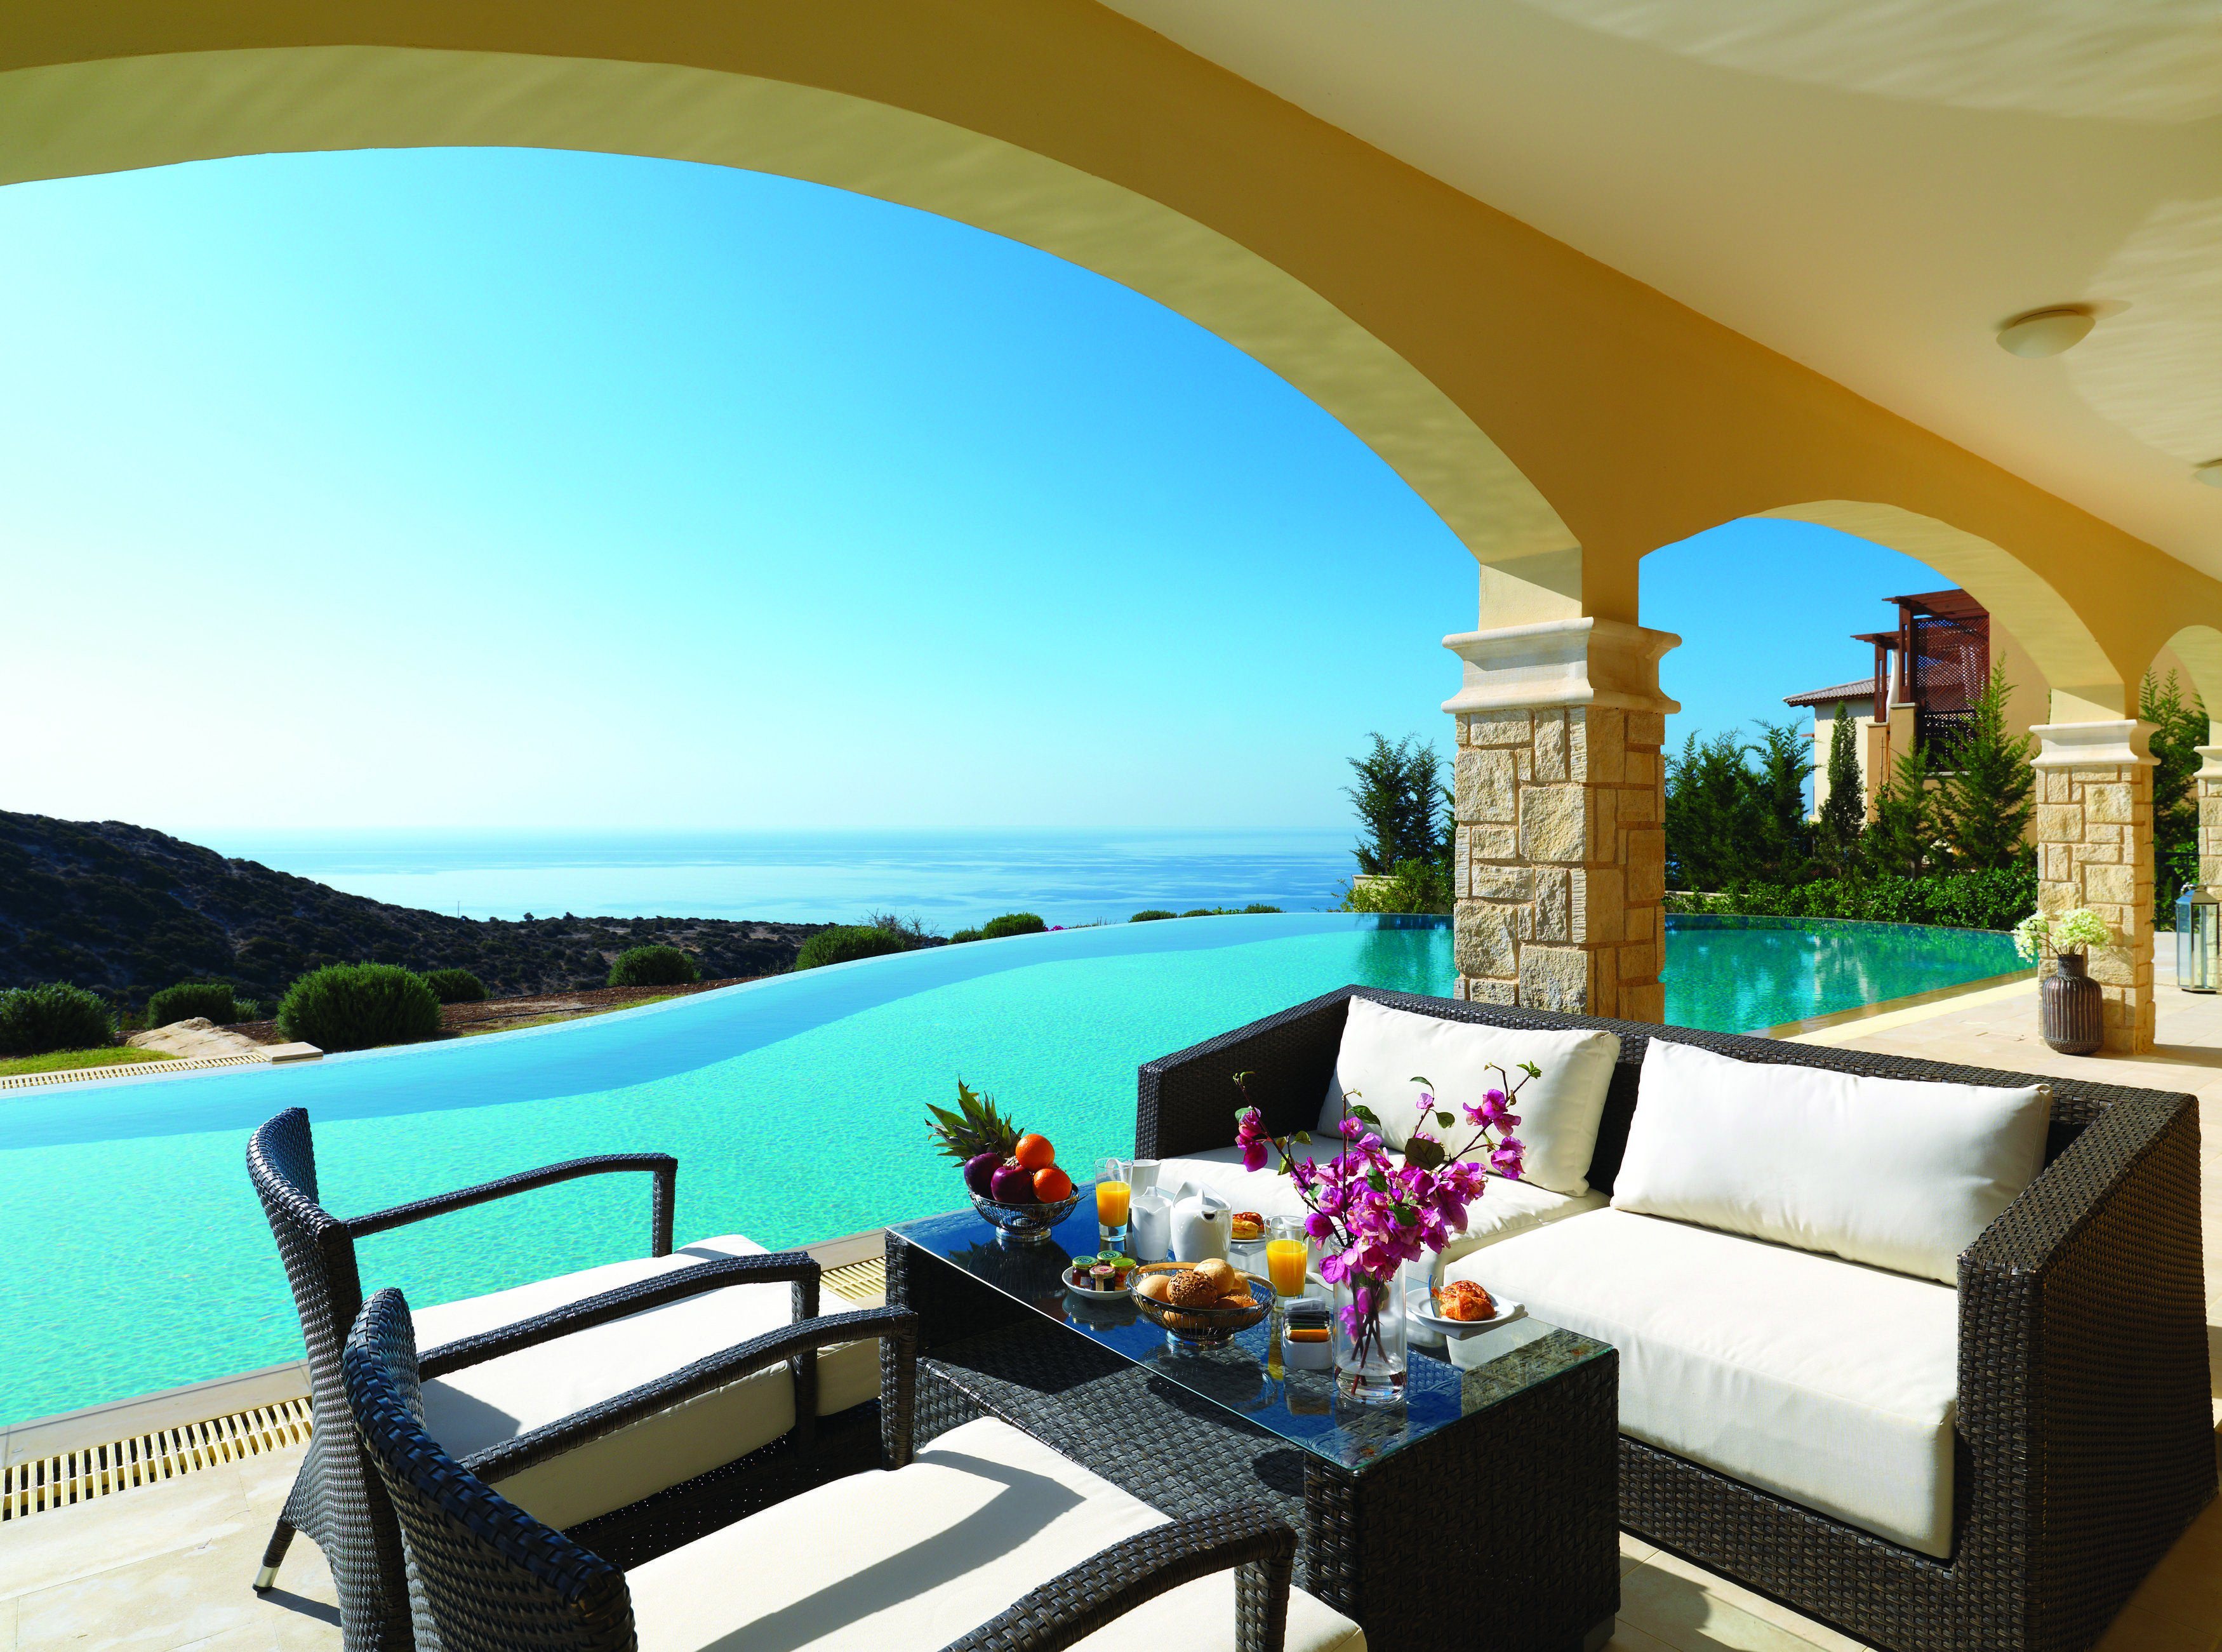 Найти игру вилла у моря. Aphrodite Hills Resort Cyprus. Вилла с видом на море. Вилла на Средиземном море. Столик с видом на море.